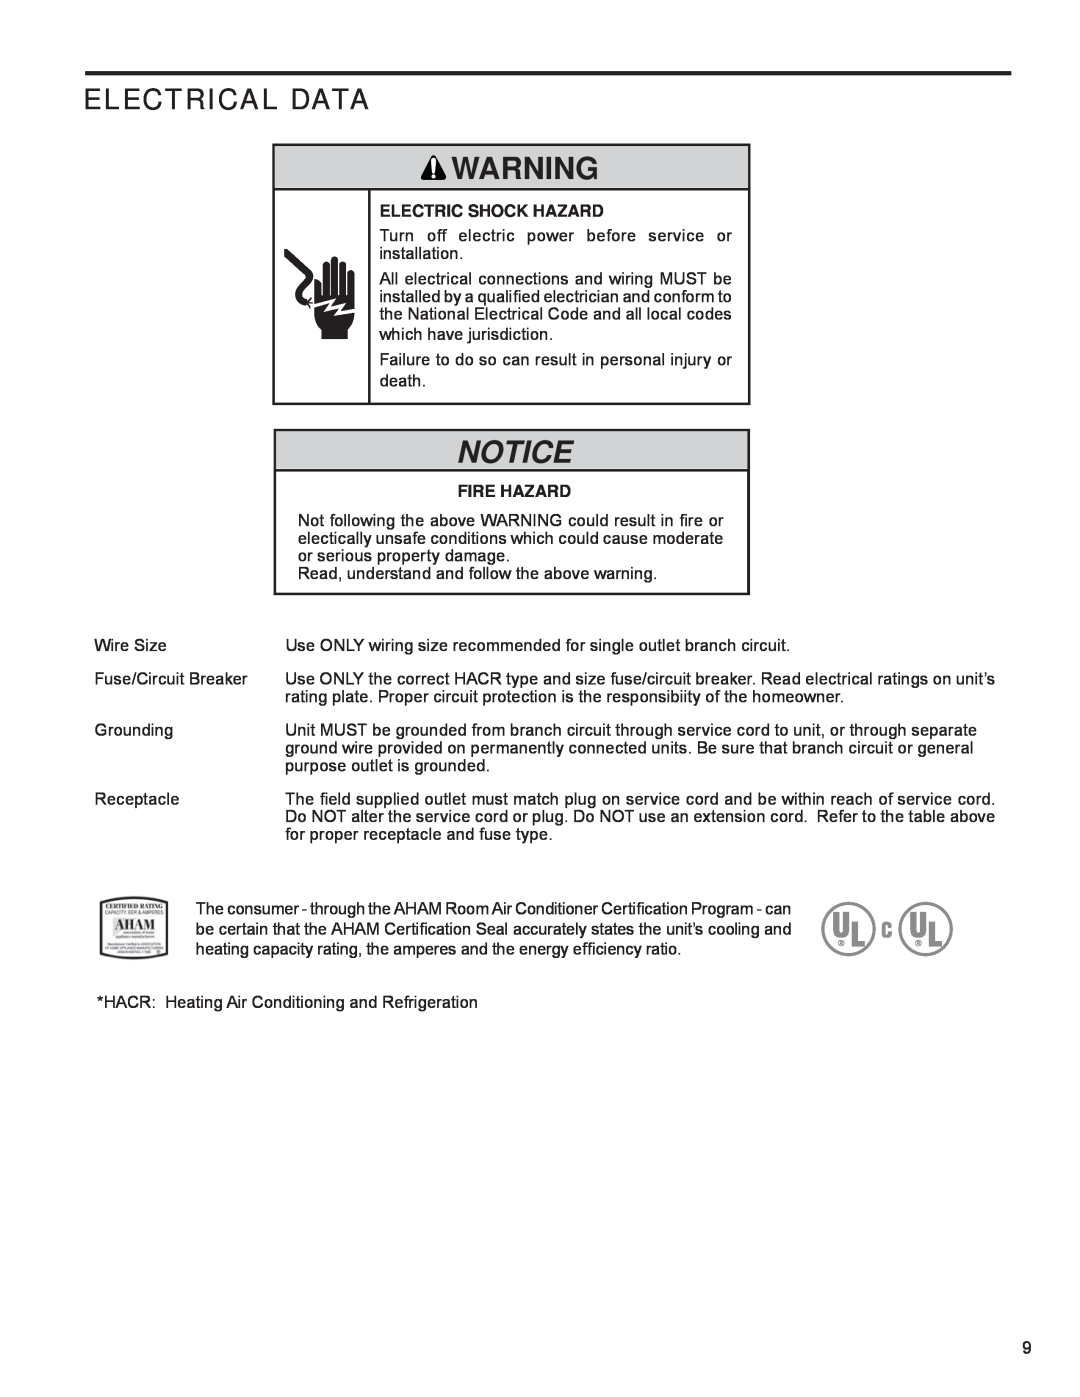 Friedrich R-410A service manual Notice, Electrical Data, Electric Shock Hazard, Fire Hazard 